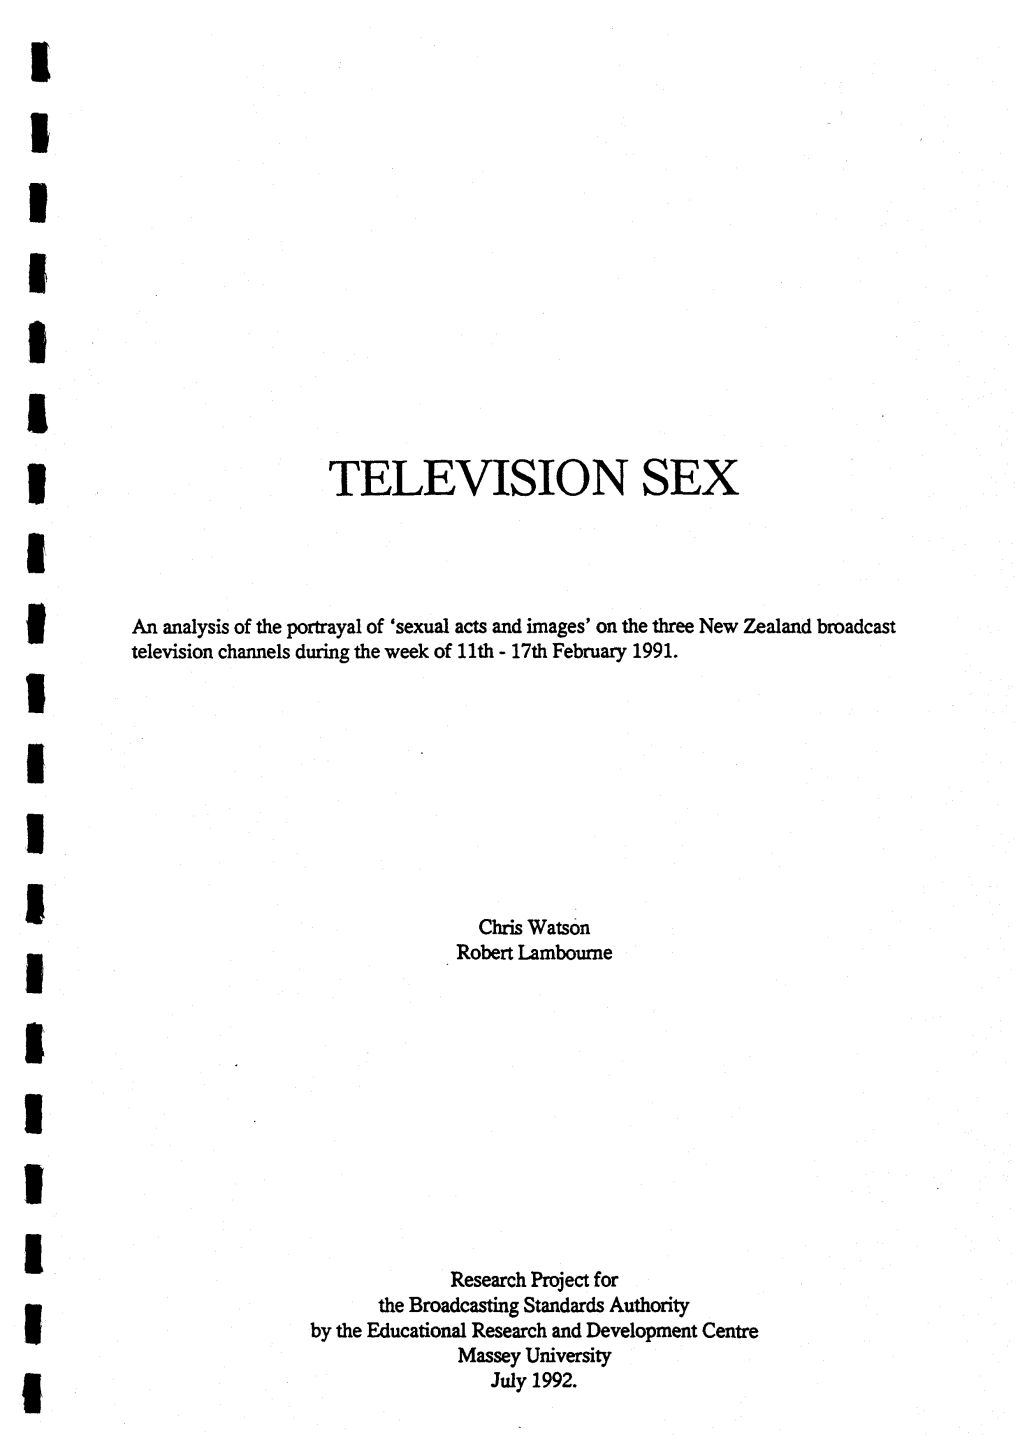 Television Sex